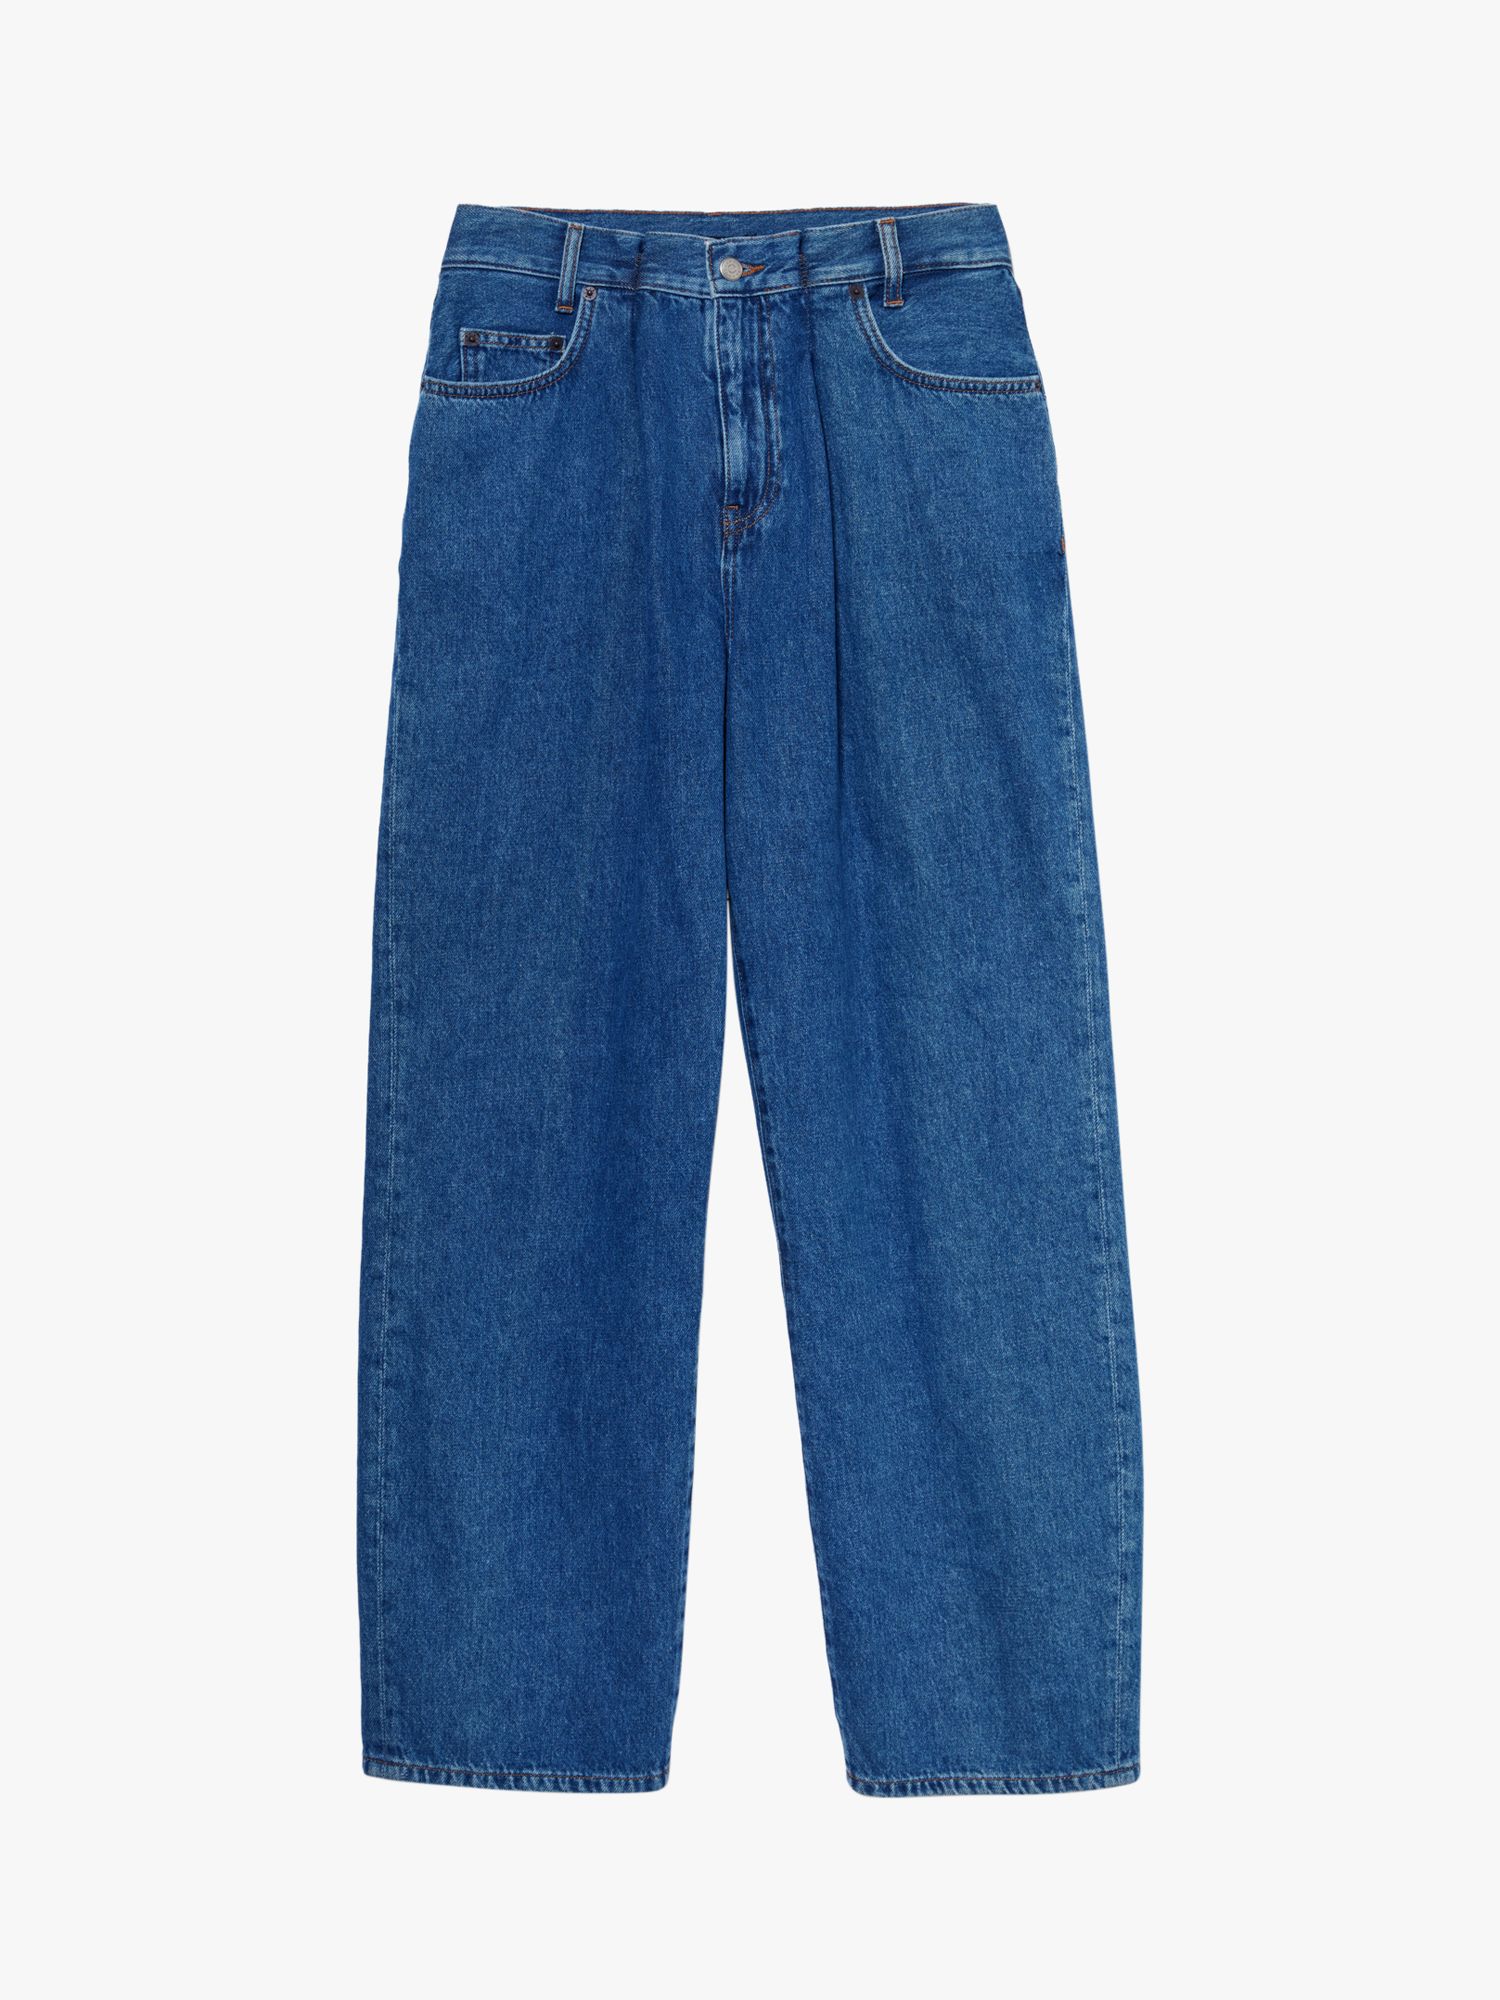 SISLEY Loose Fit Front Pleat Jeans, Blue Denim, 26R